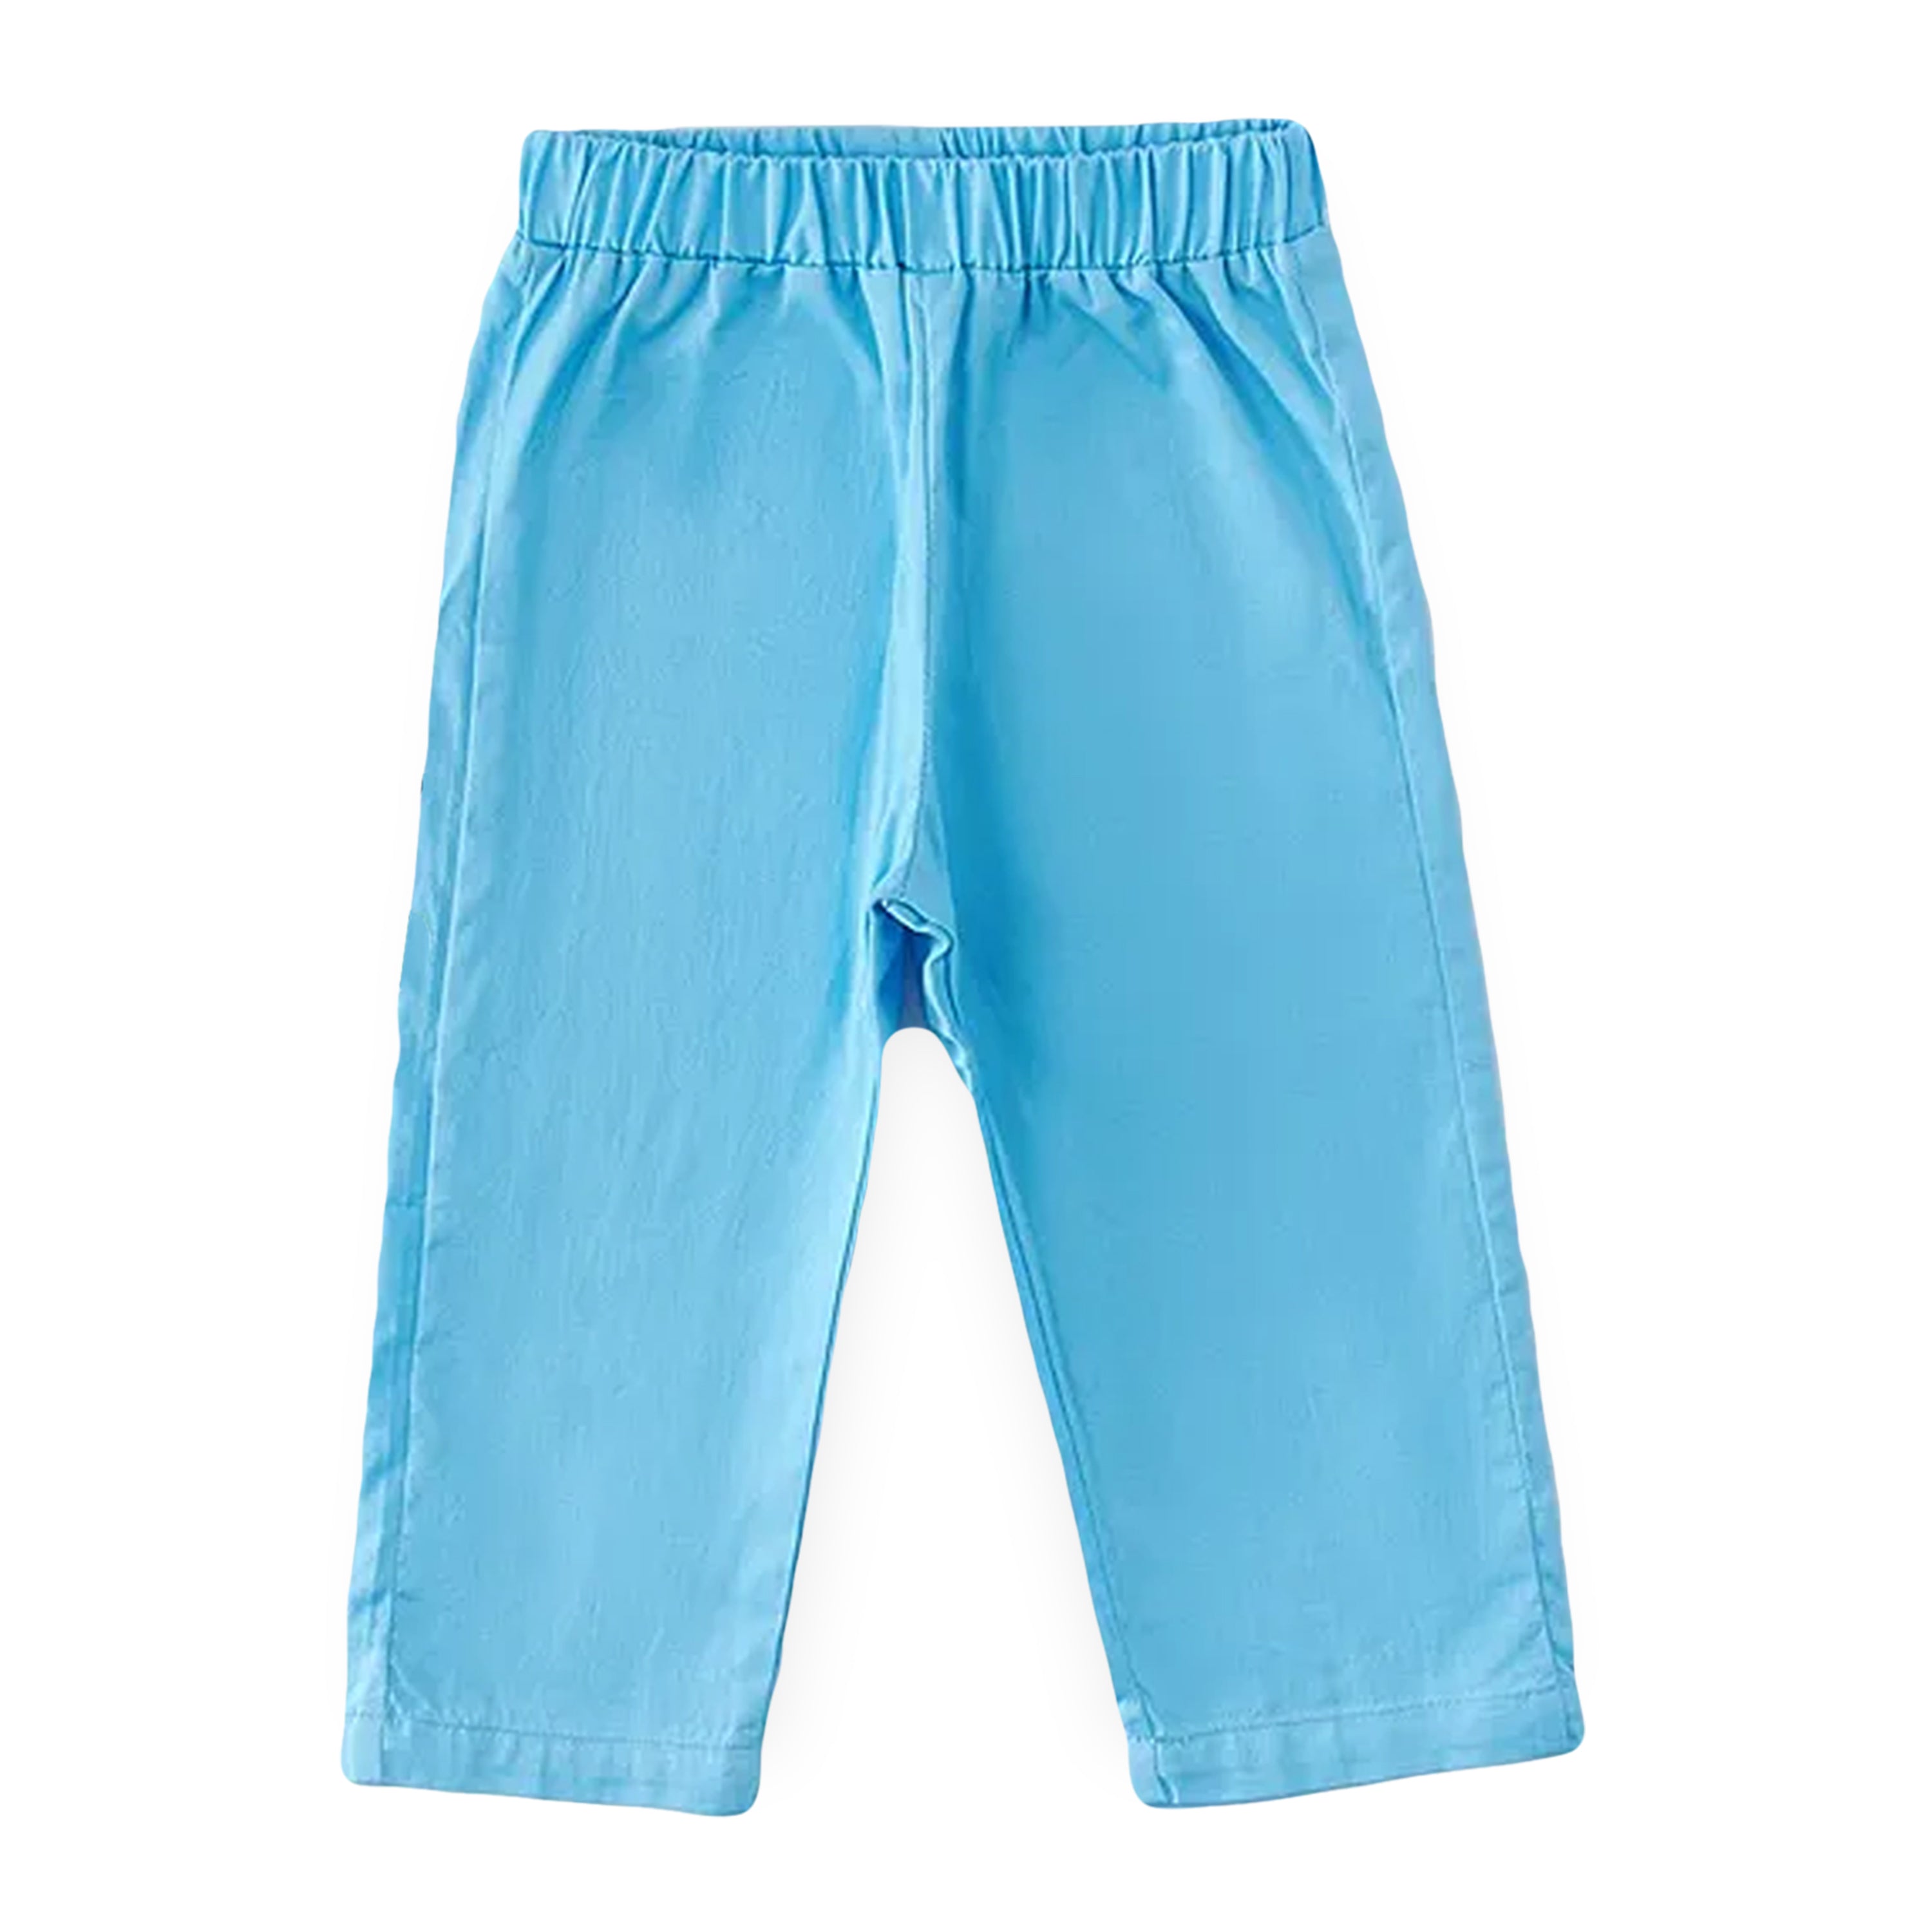 Kids sky blue Solid Cotton Track pants